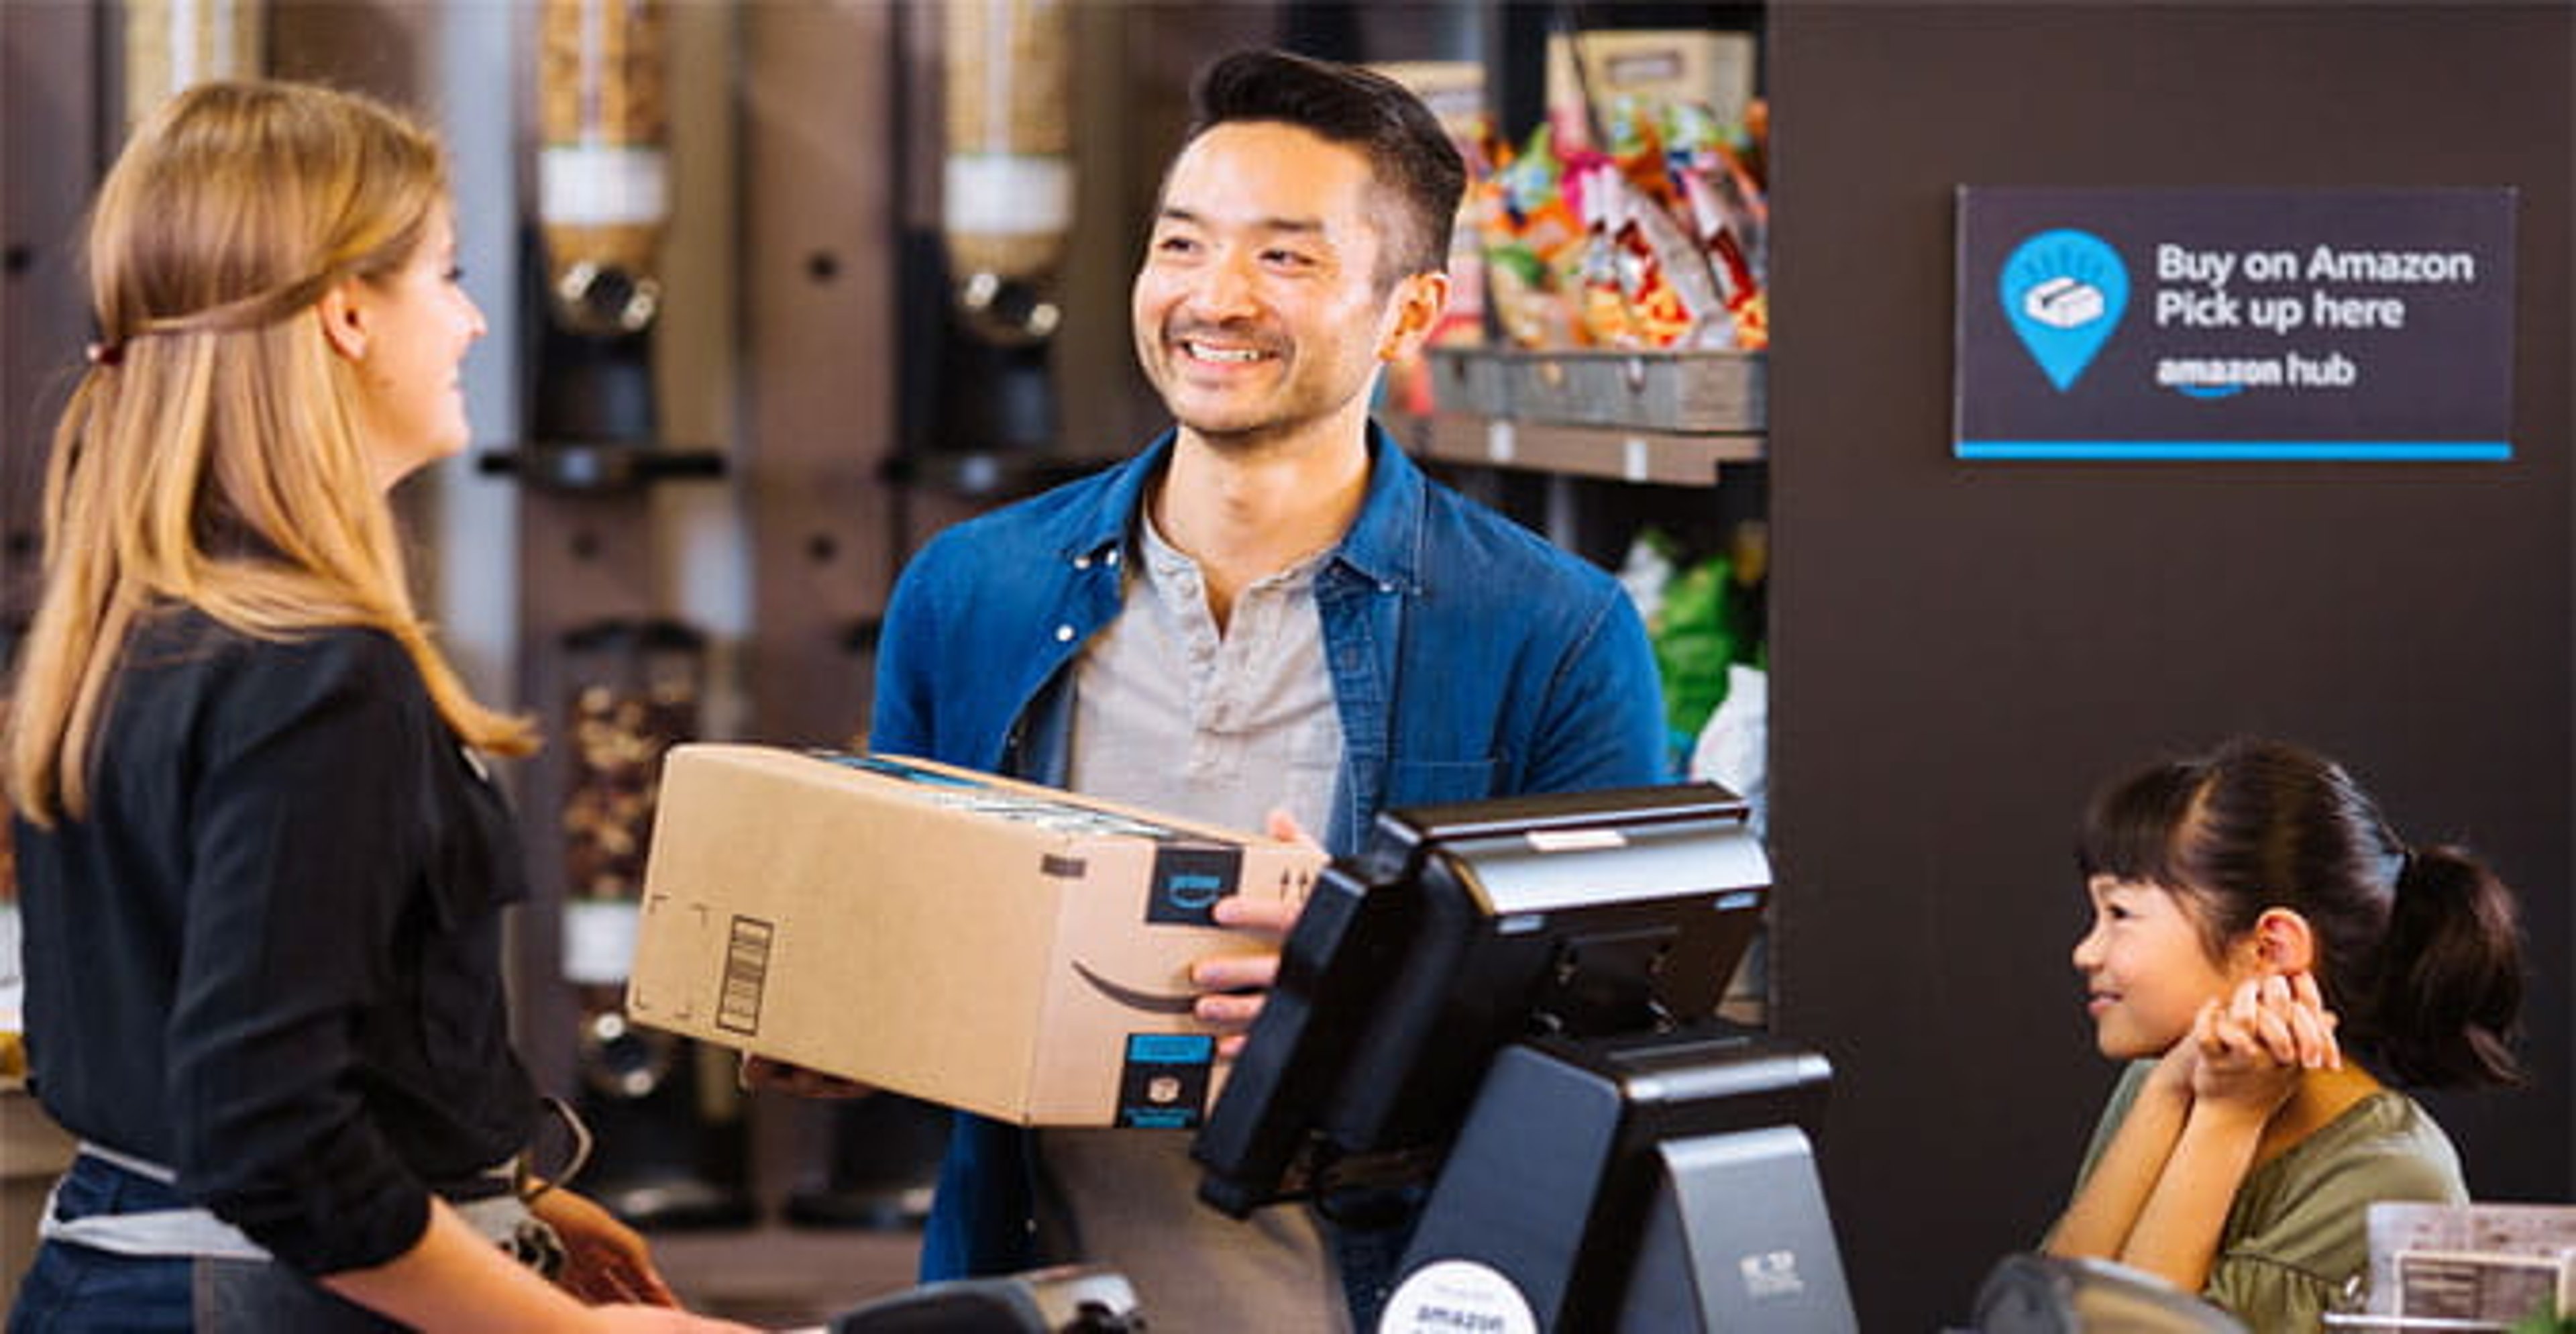 Customer picking up Amazon package at Amazon pickup location